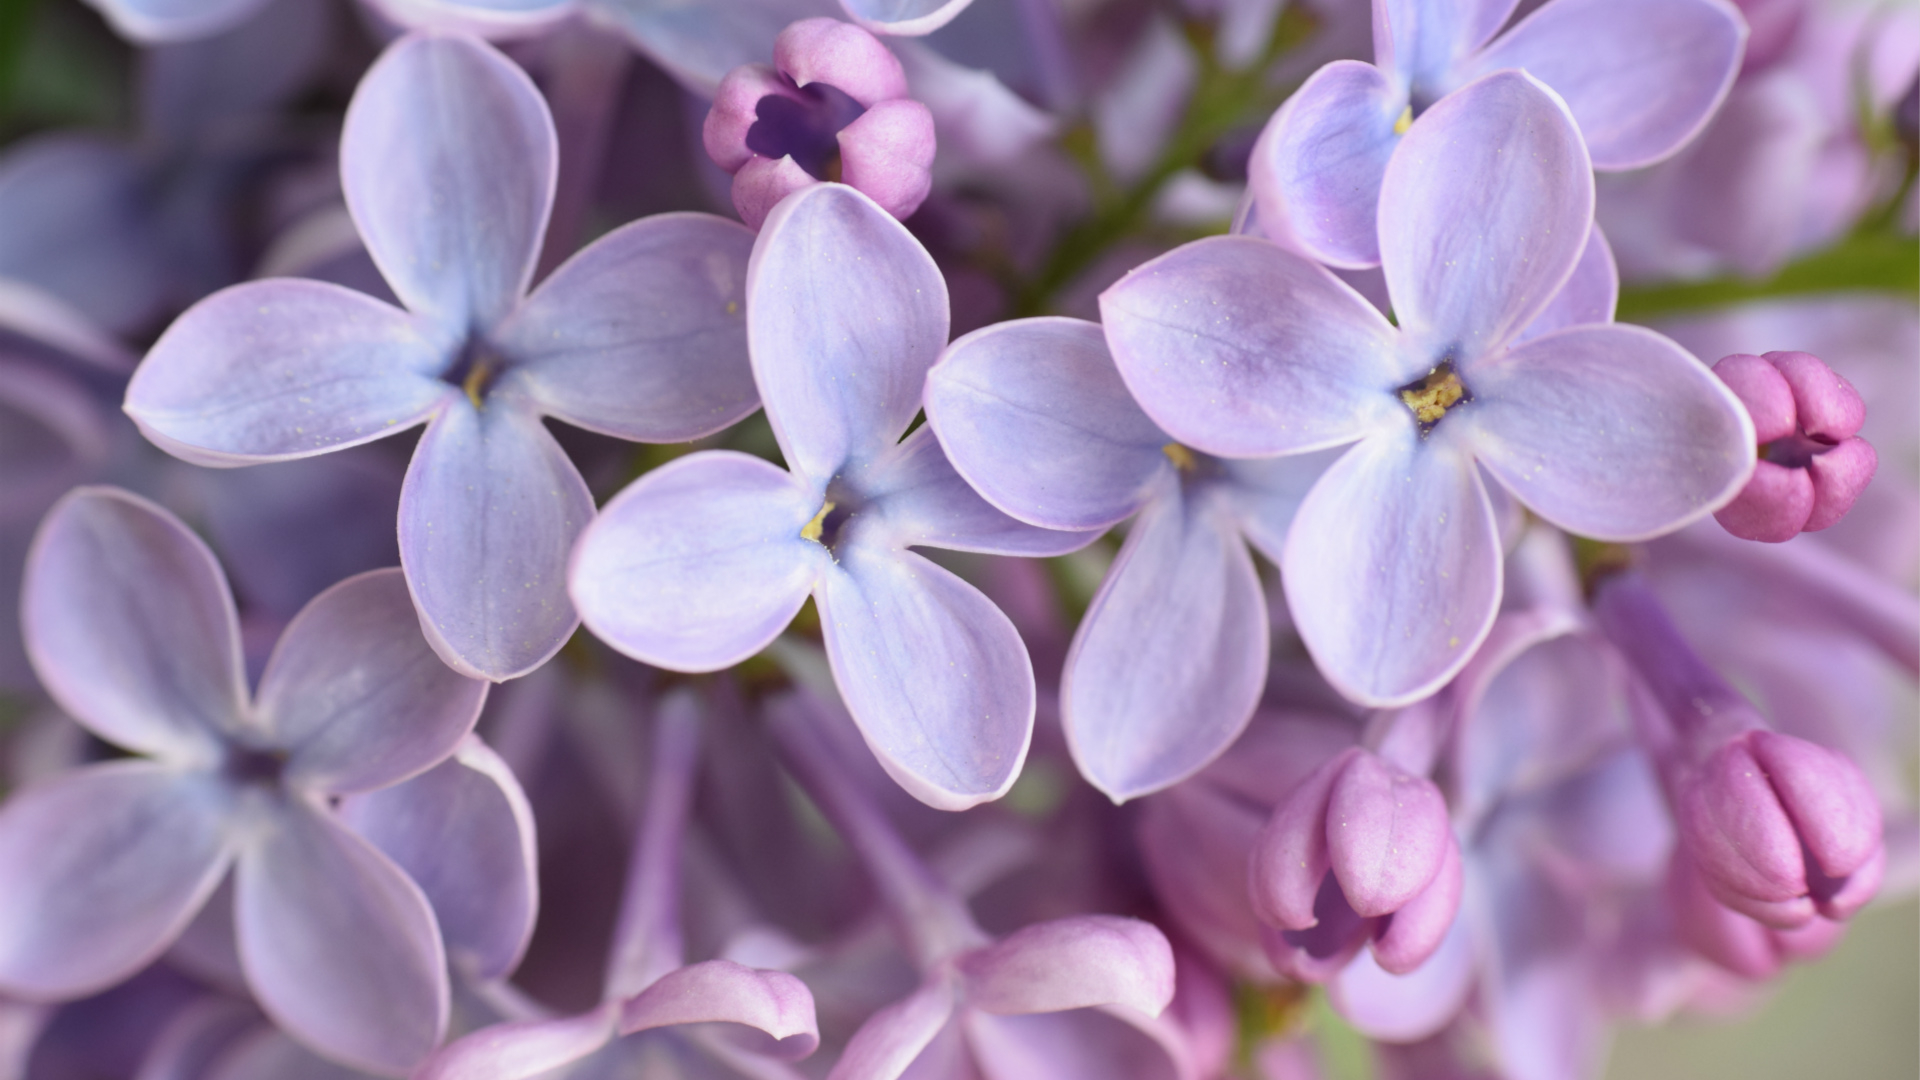 lilac: tiny flowers with big uses - cgtn